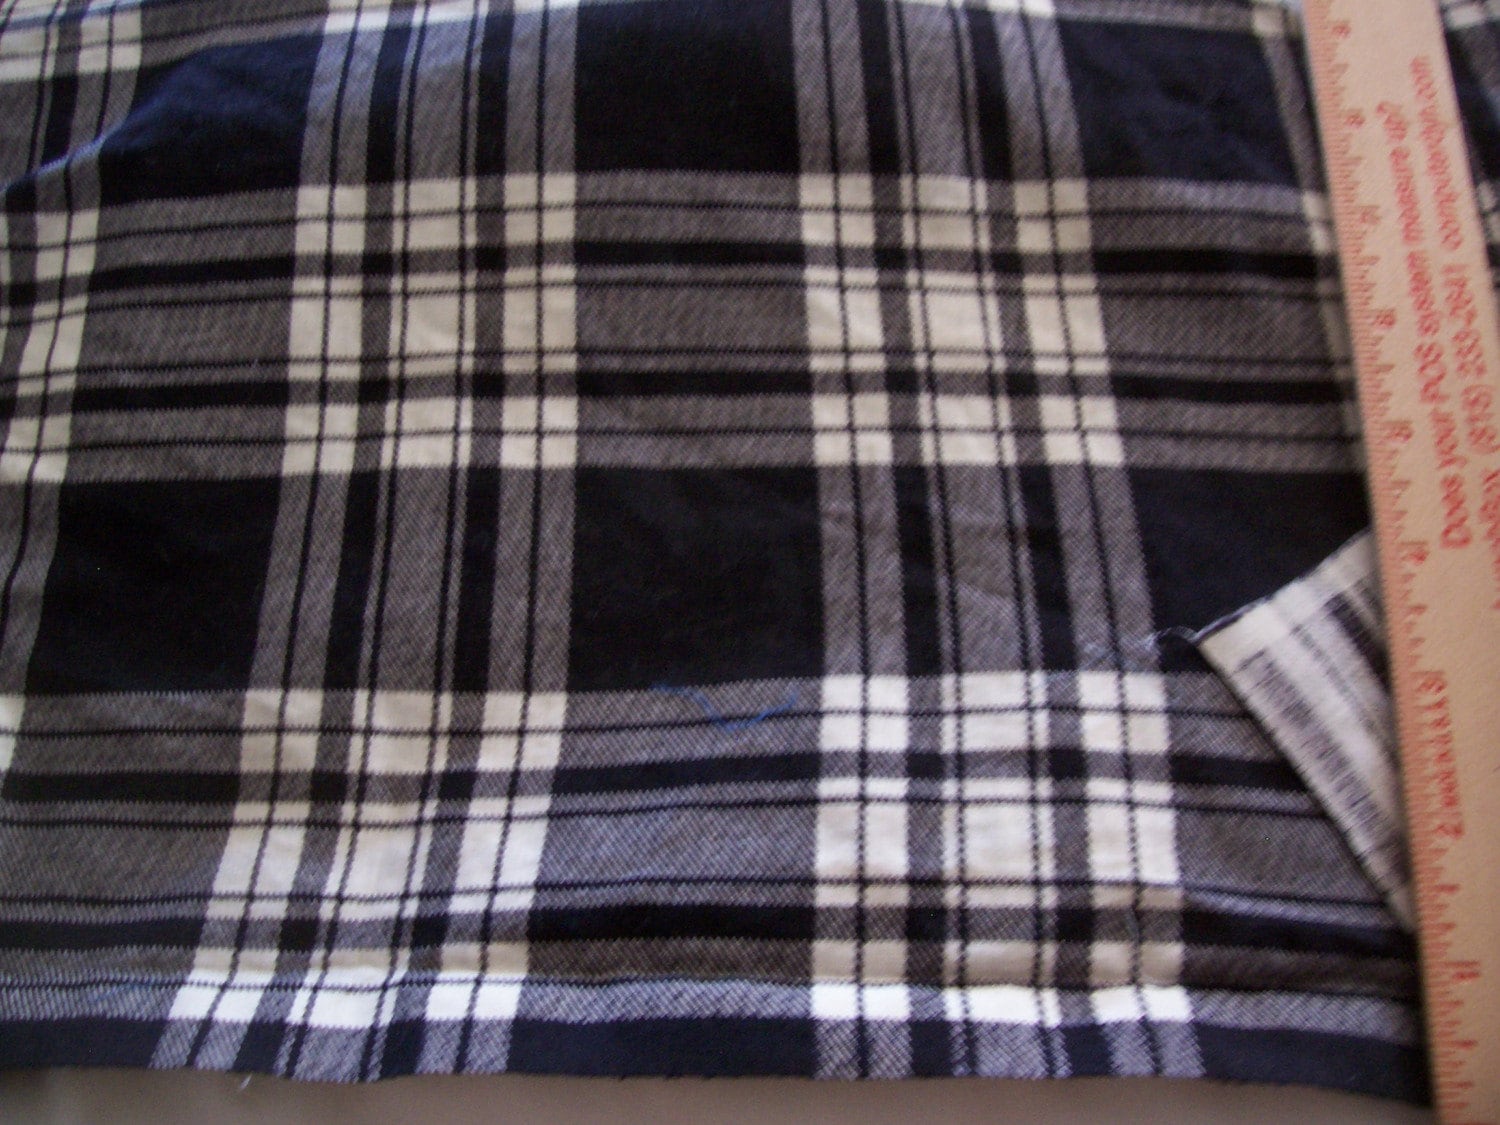 Black and White Plaid fabric 59 length x 44